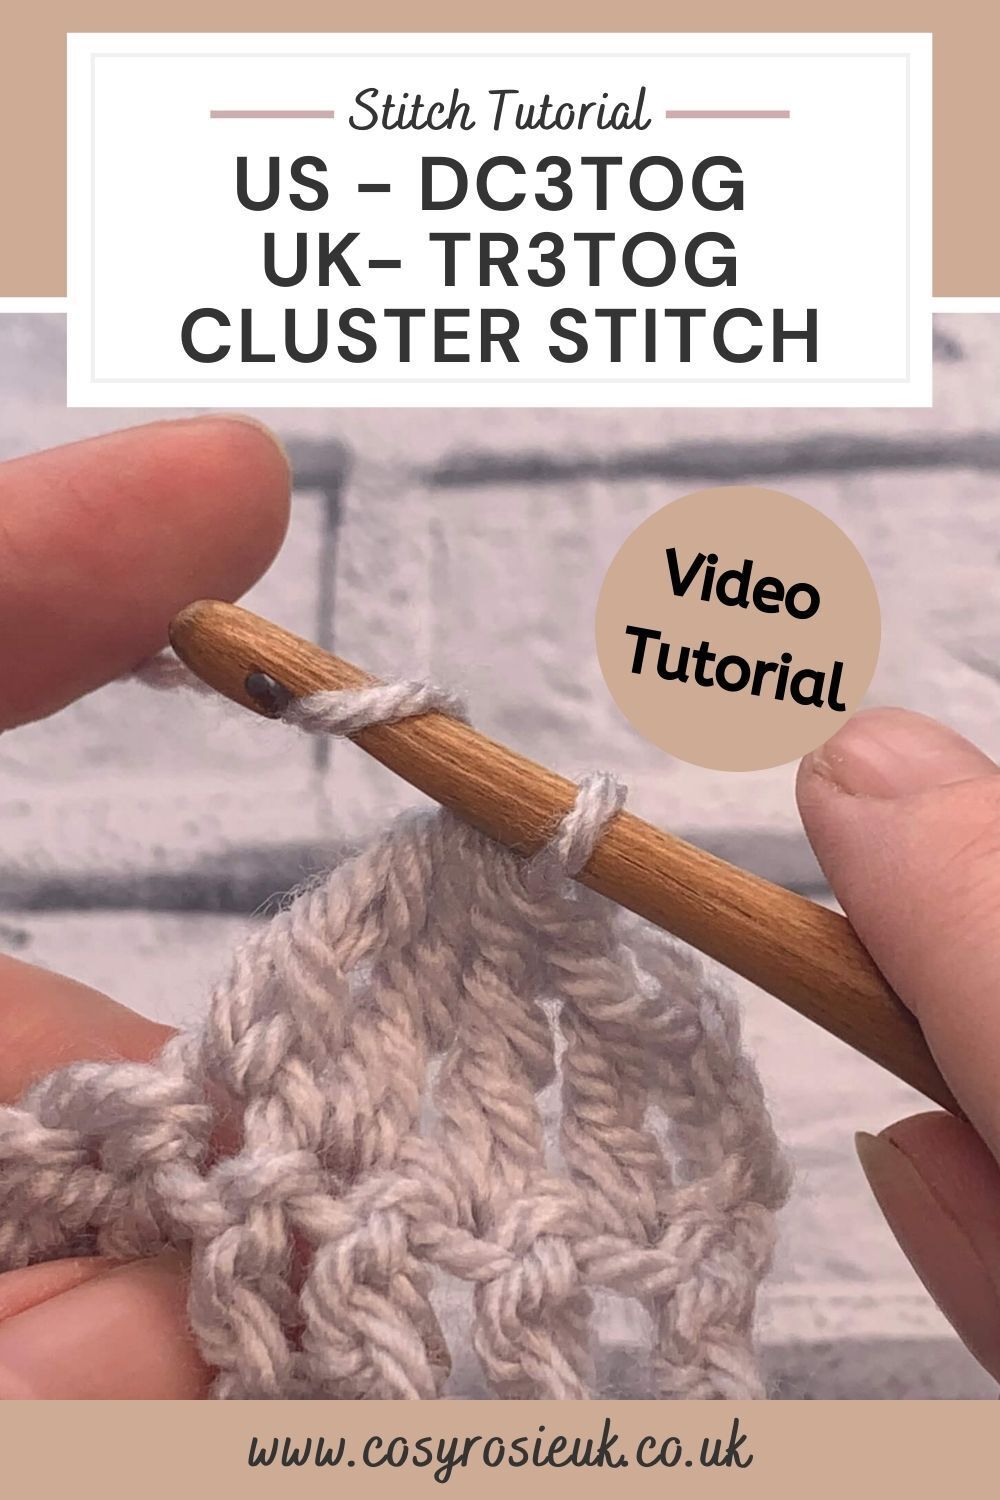 2 Dc Cluster Stitch